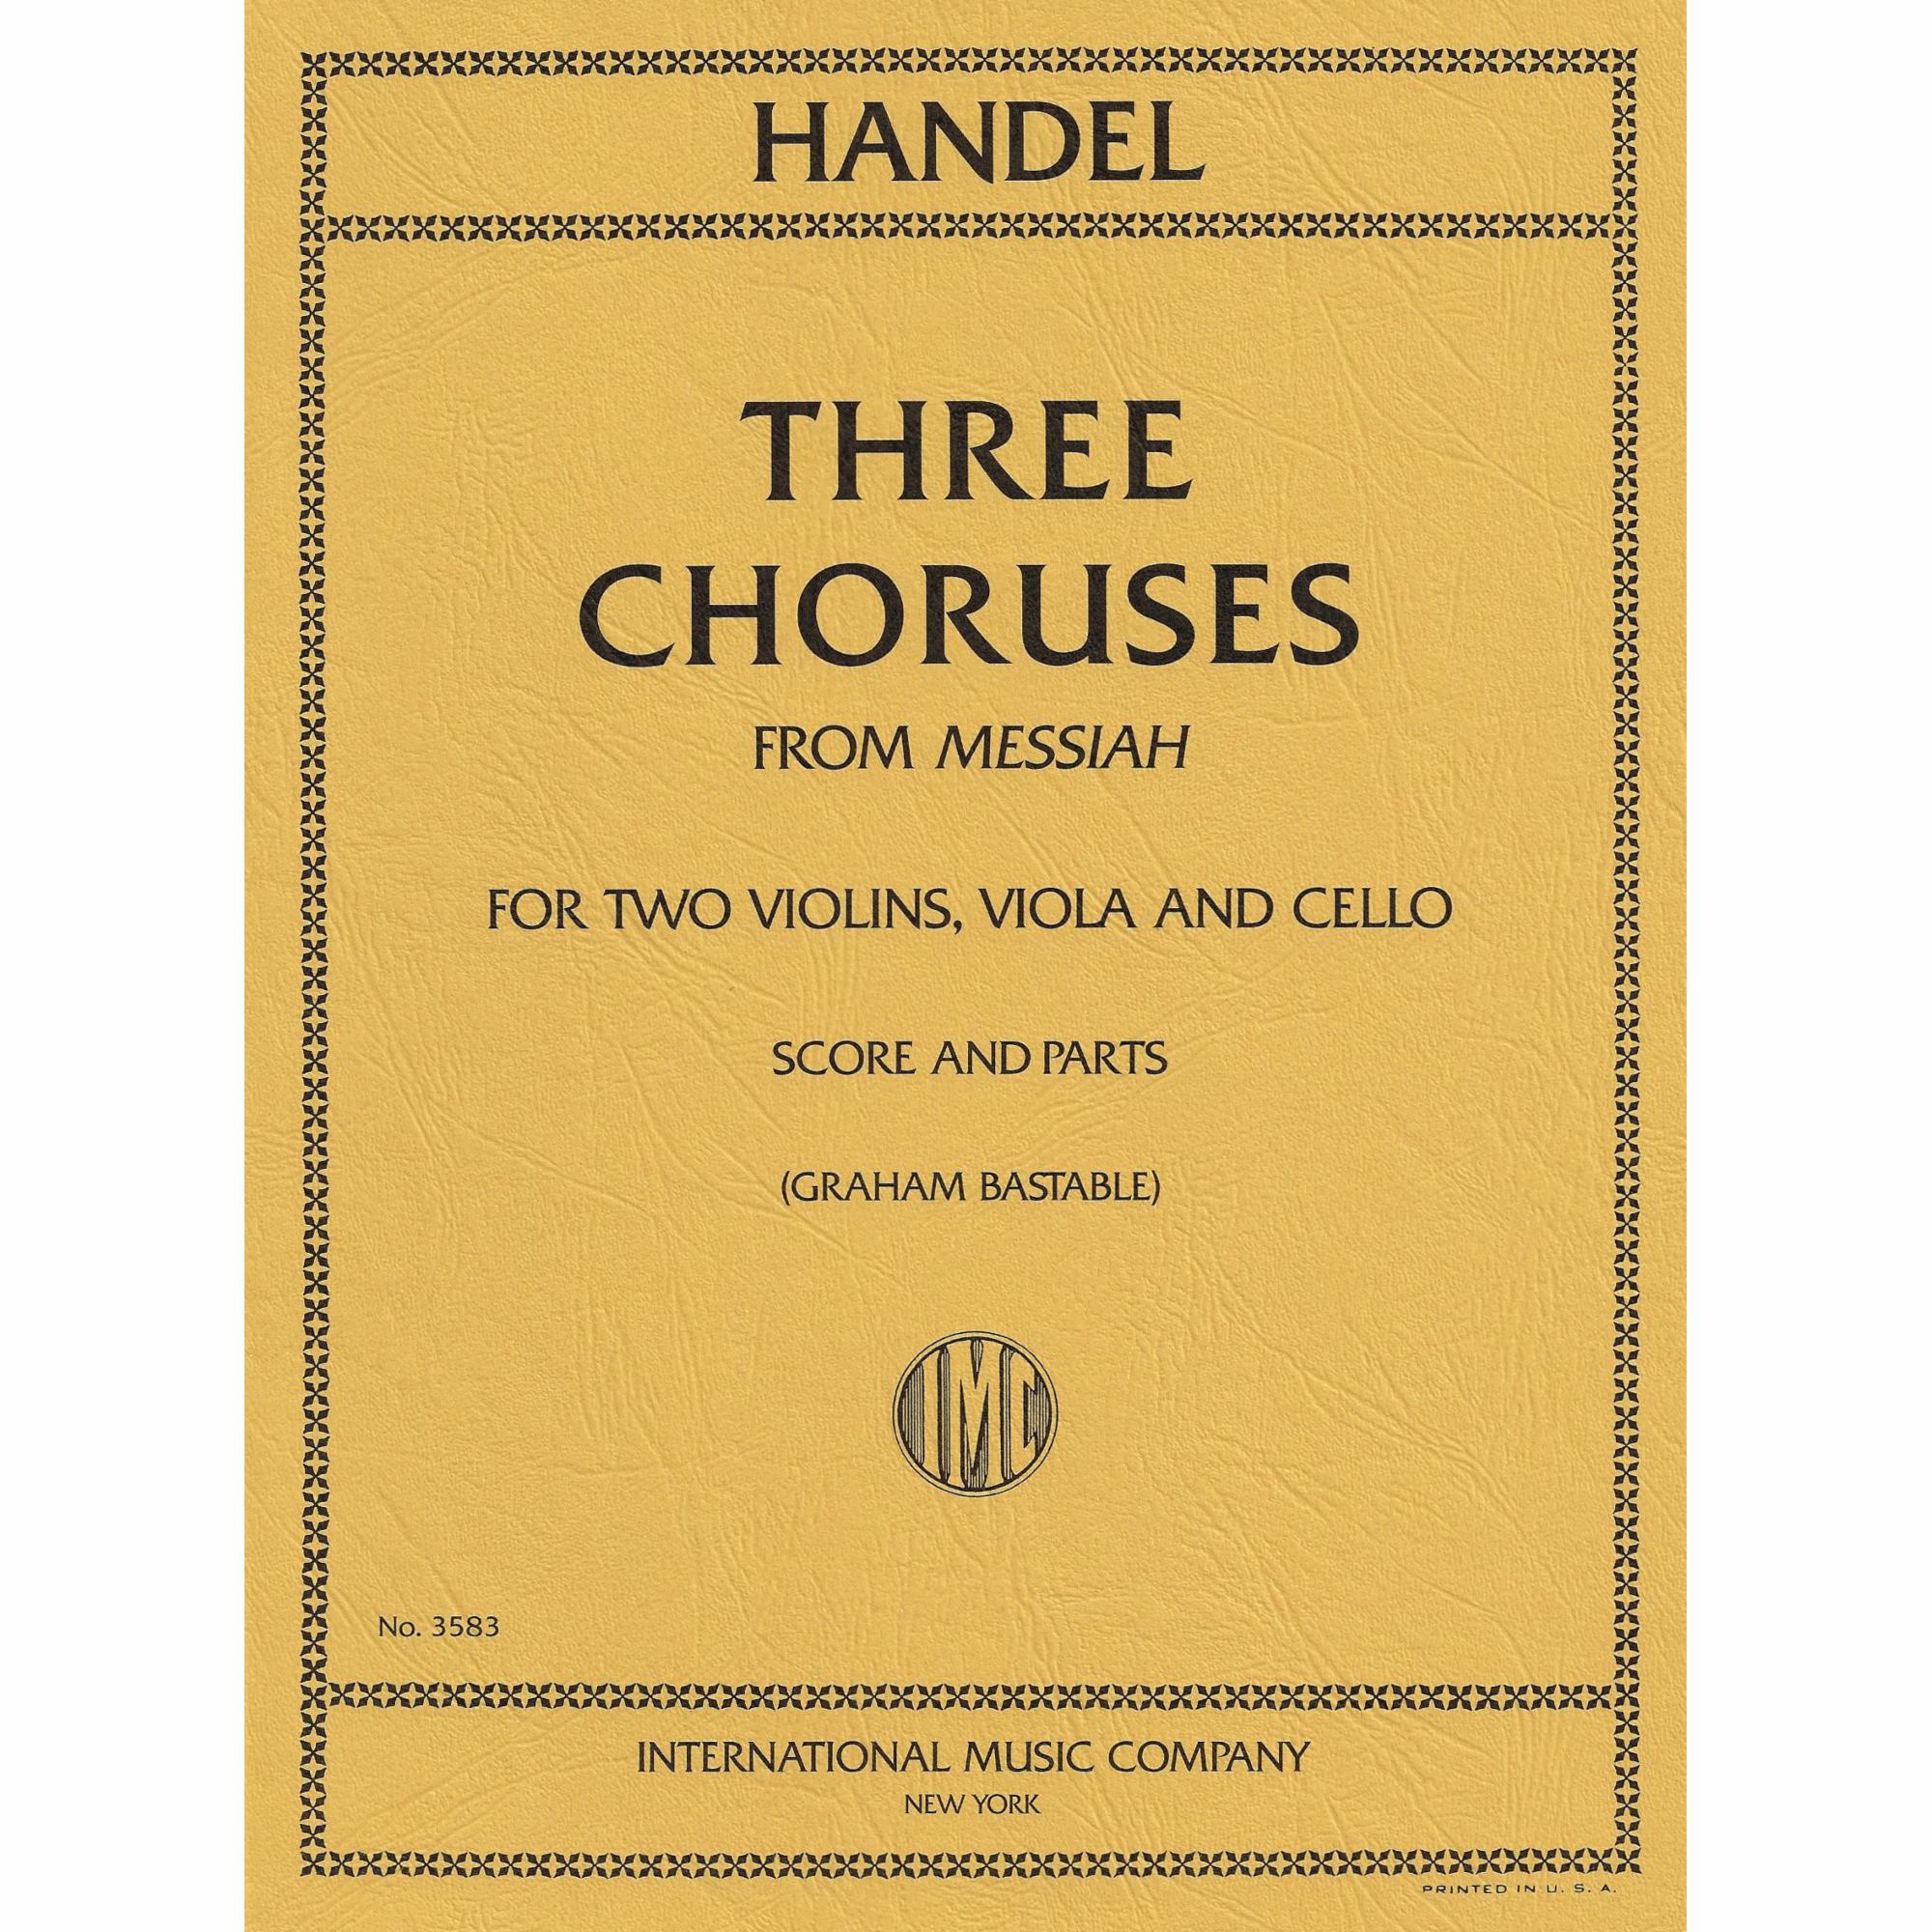 Three Choruses from Handel's Messiah for String Quartet